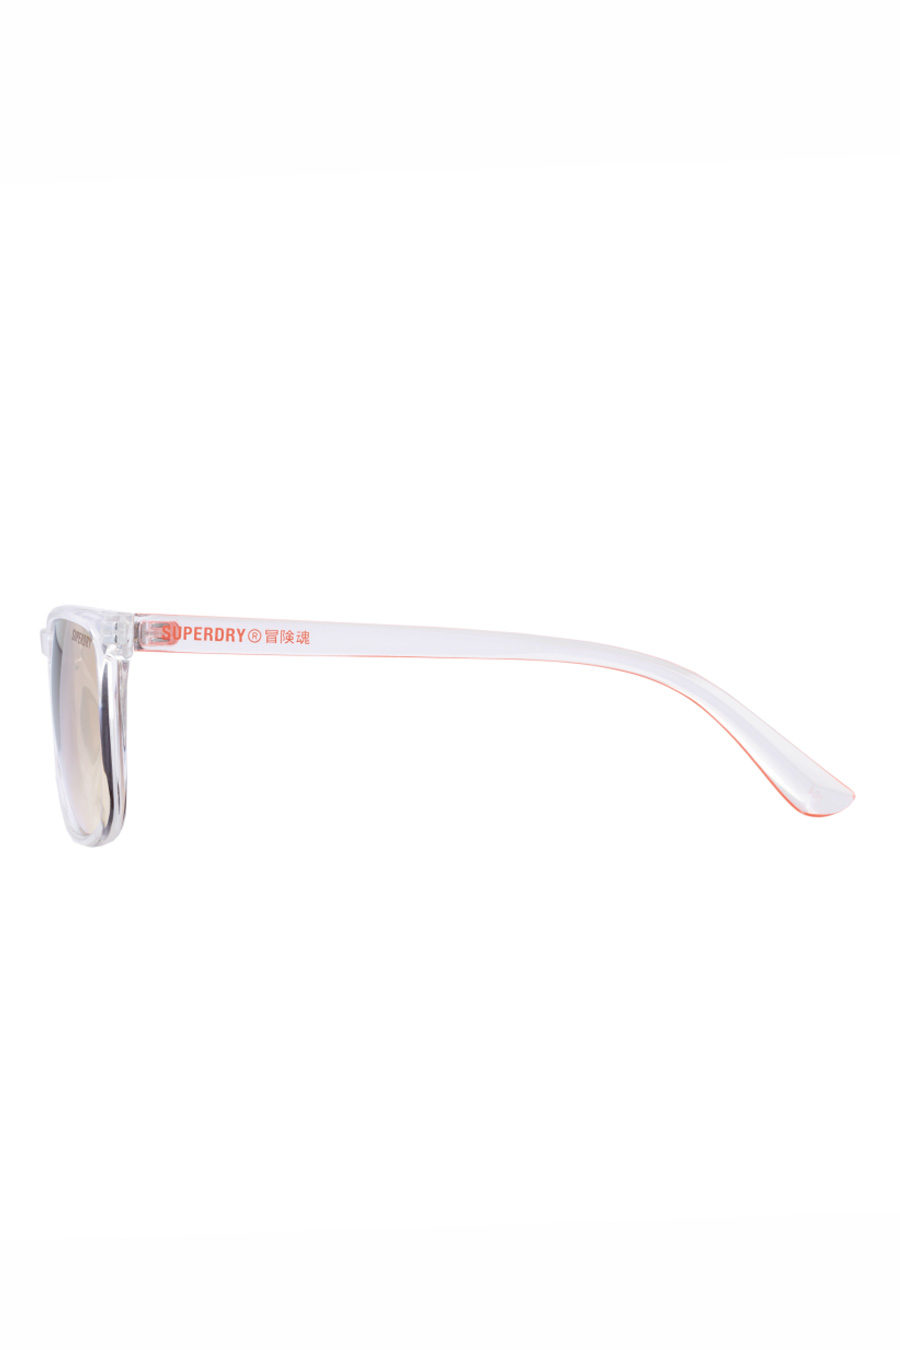 Солнечные очки SUPERDRY SDS-SHOCKWAVE-150